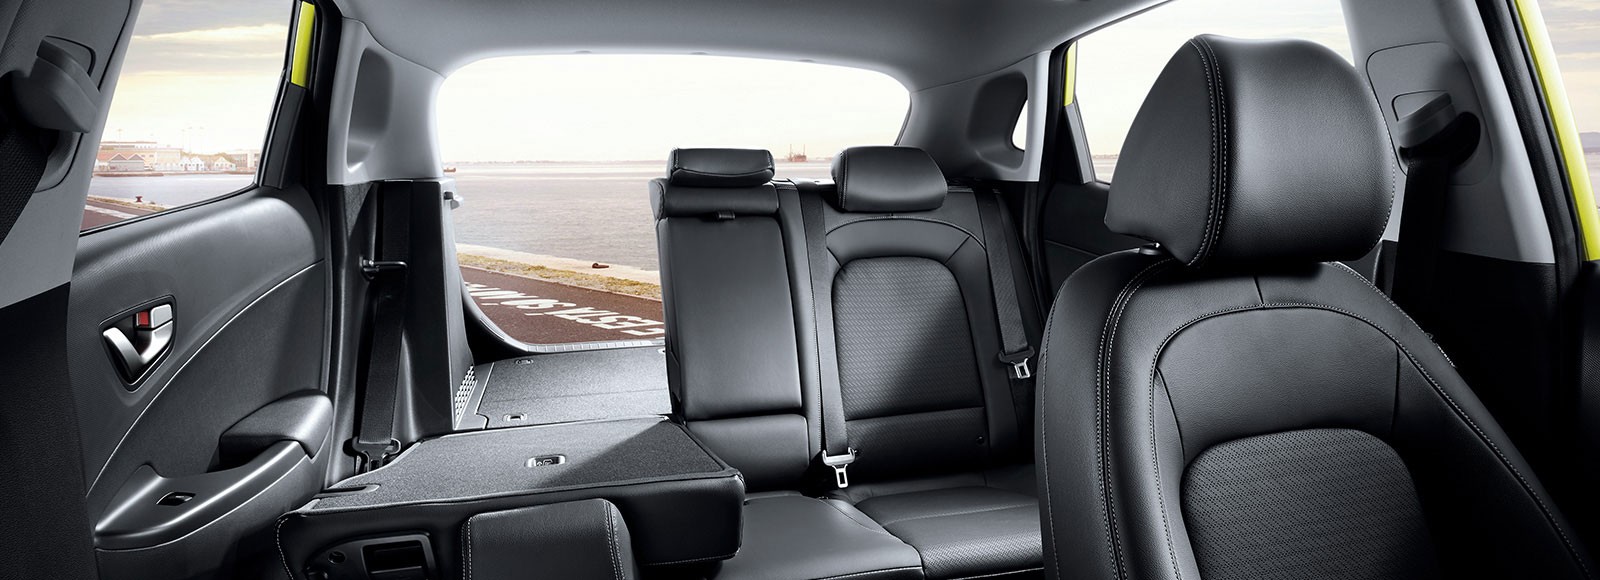 kona os convenience front view interior split folding rear seats pc